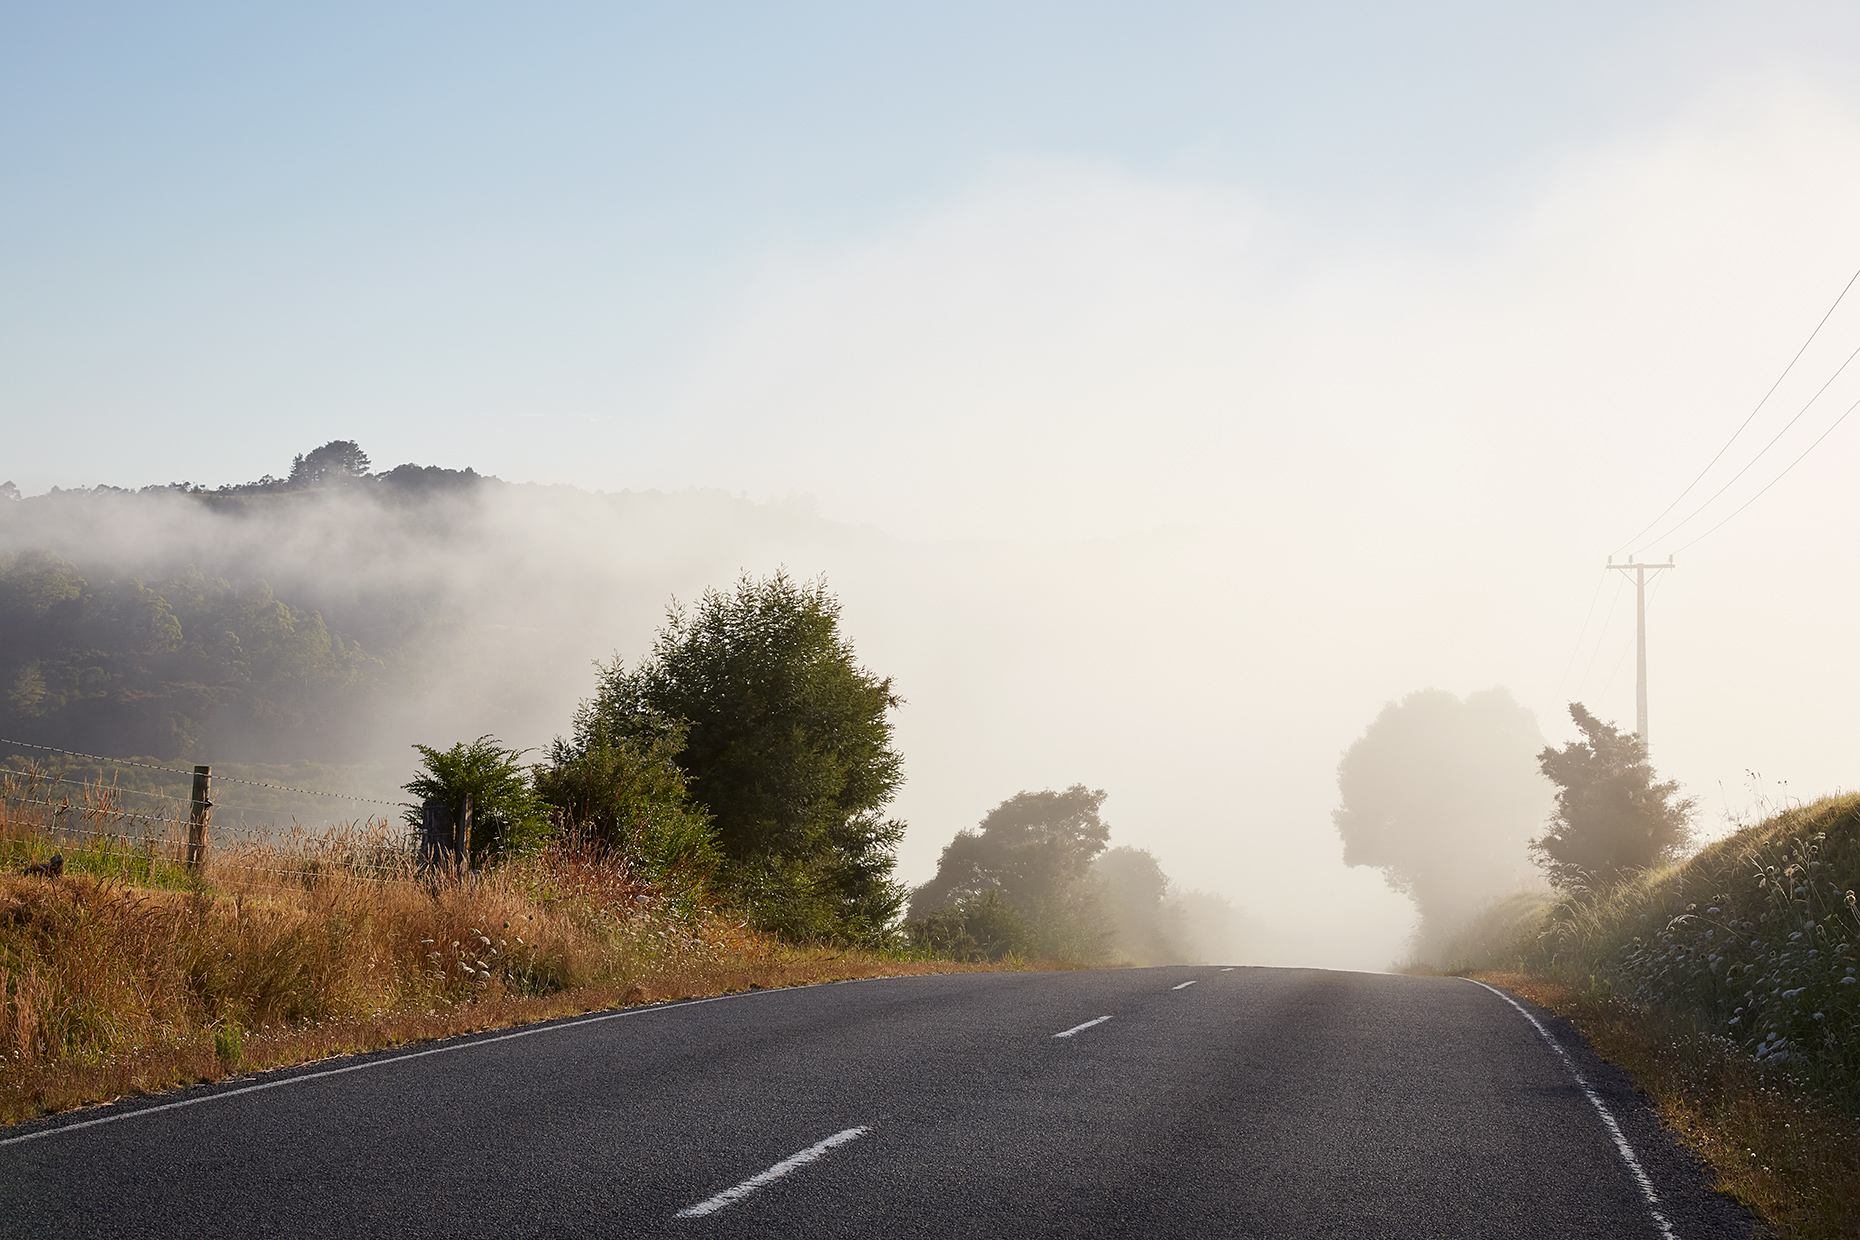 Early morning fog, Taumarere, New Zealand, 2019